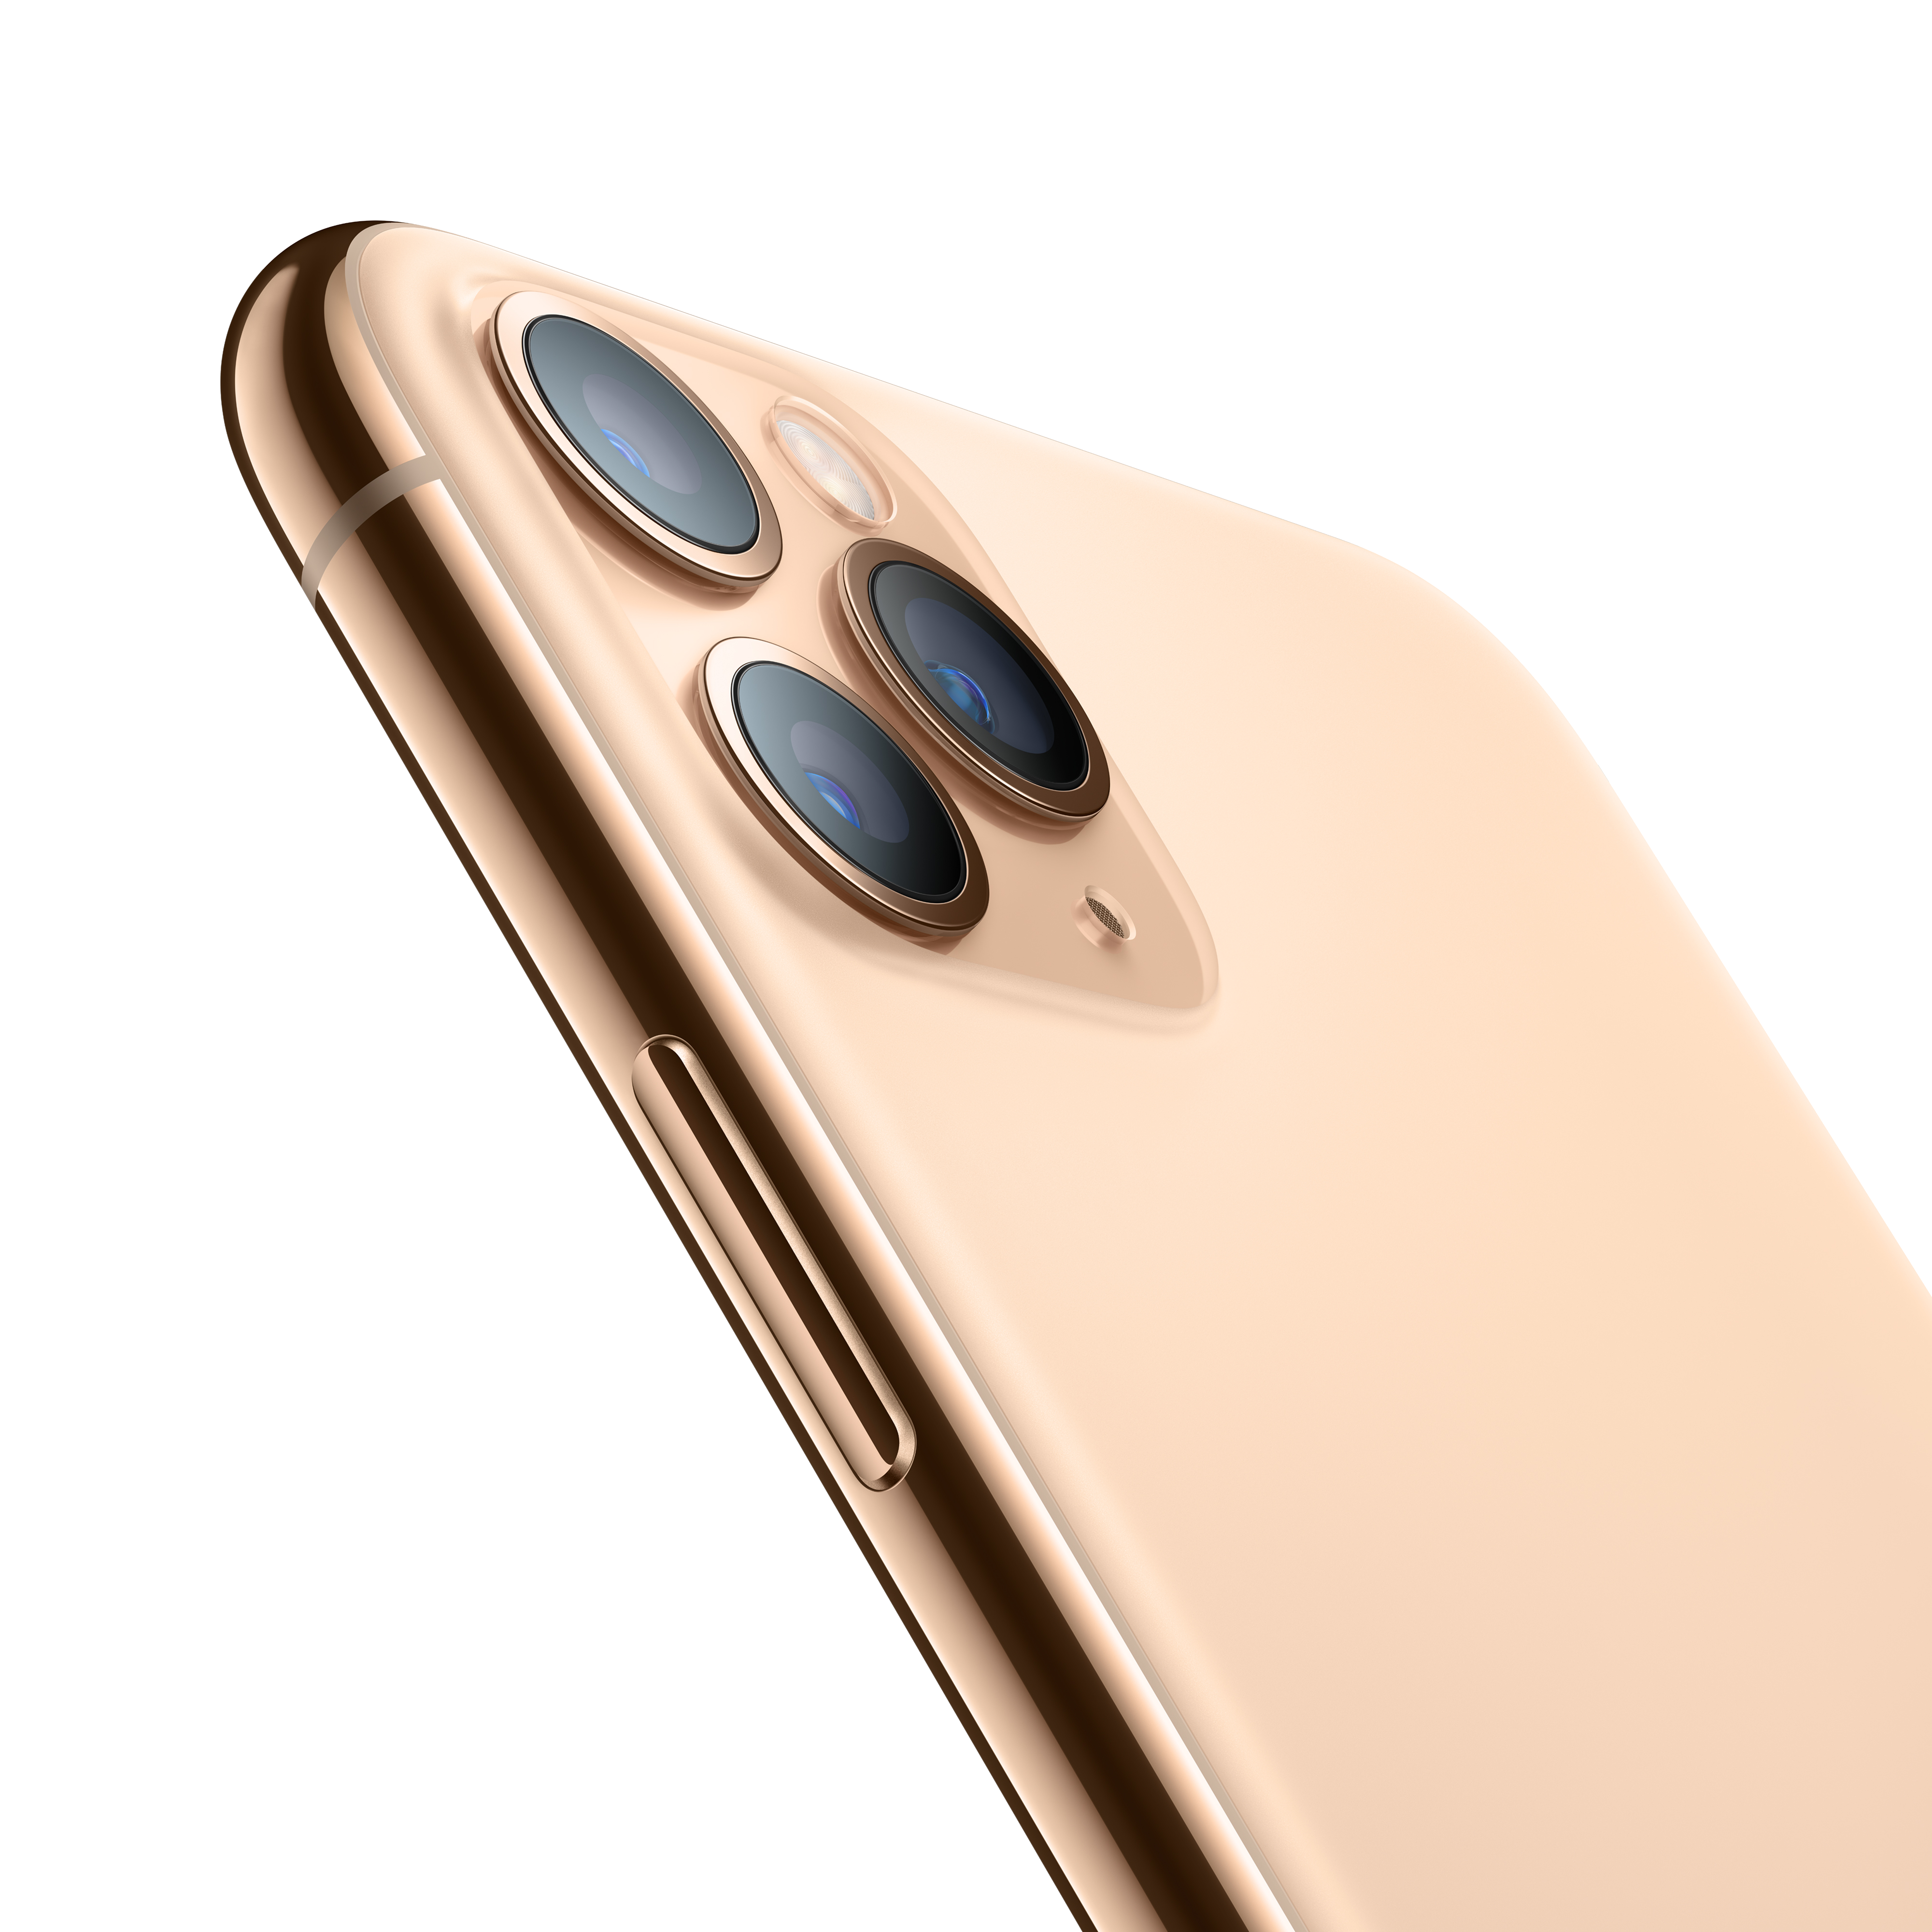 Apple Iphone 11 pro 512gb dorado libre reacondicionado 58 oro 512 mwcf2qla 5.8 6 ram oled super retina xdr a13 3